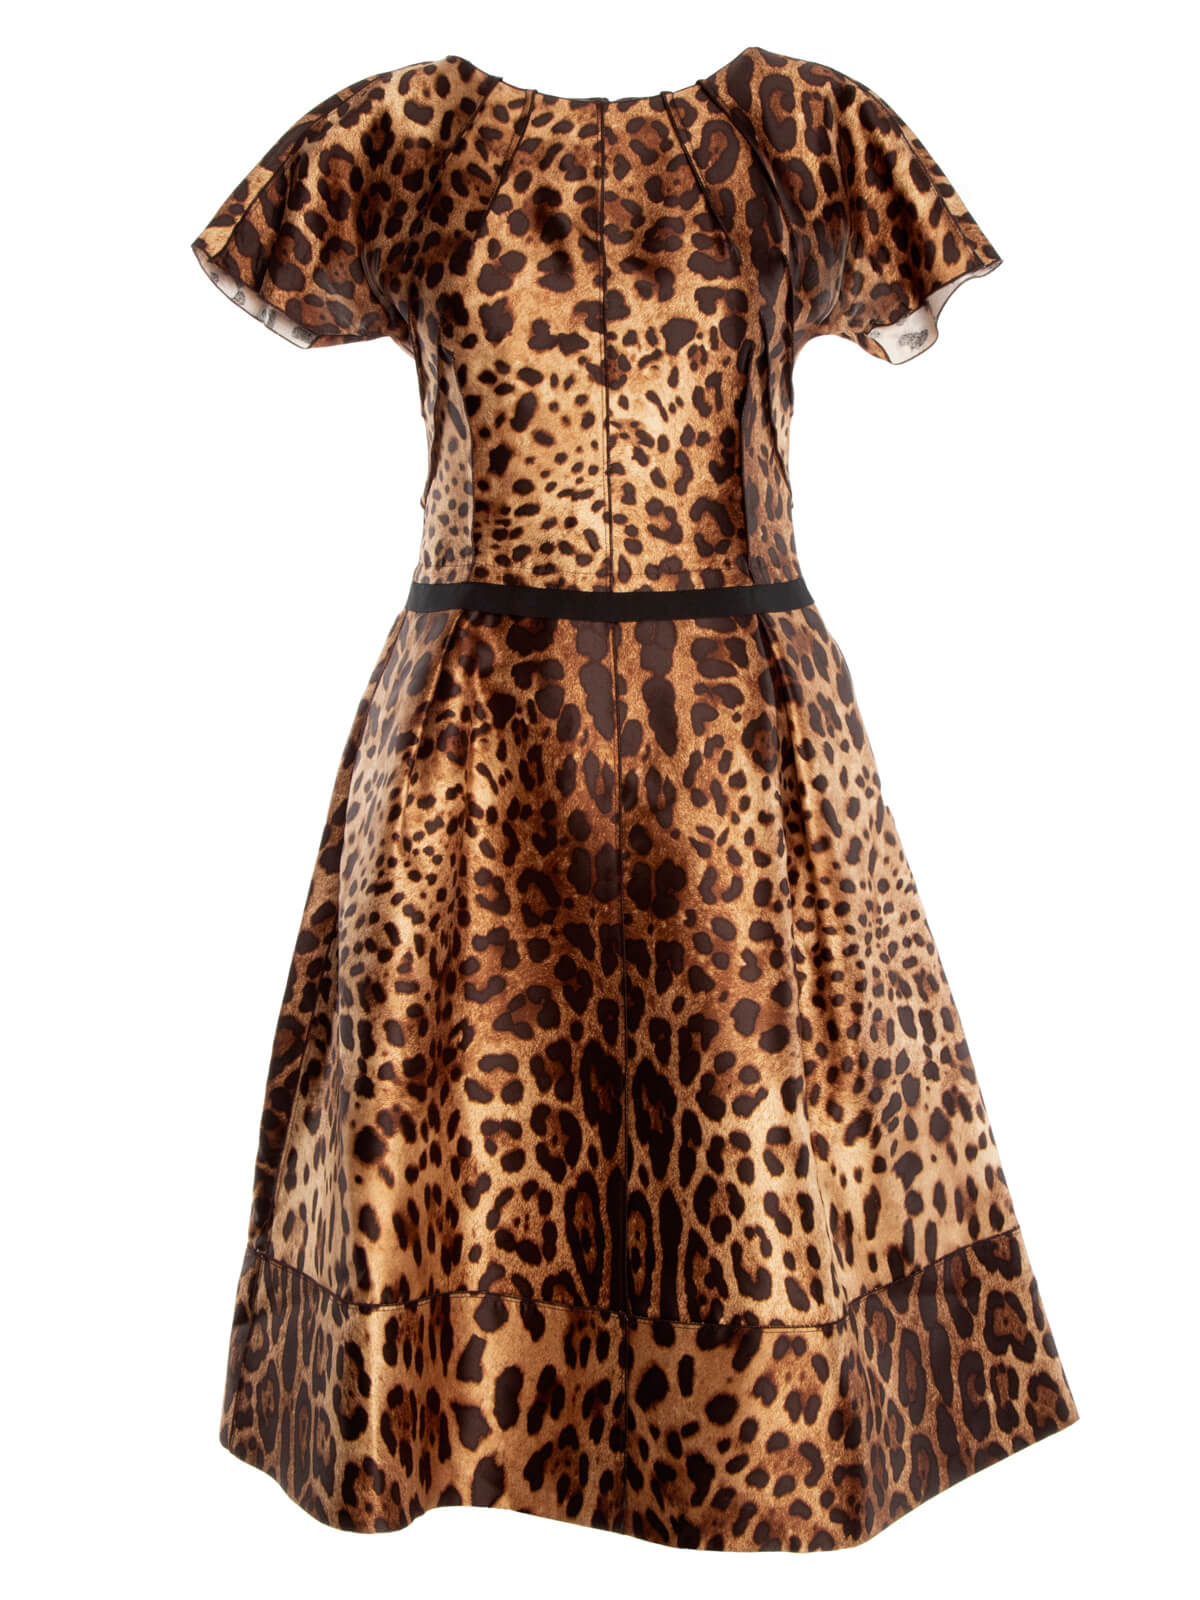 Dolce & Gabbana Women's Leopard Dress, Size 10 UK, Brown Silk